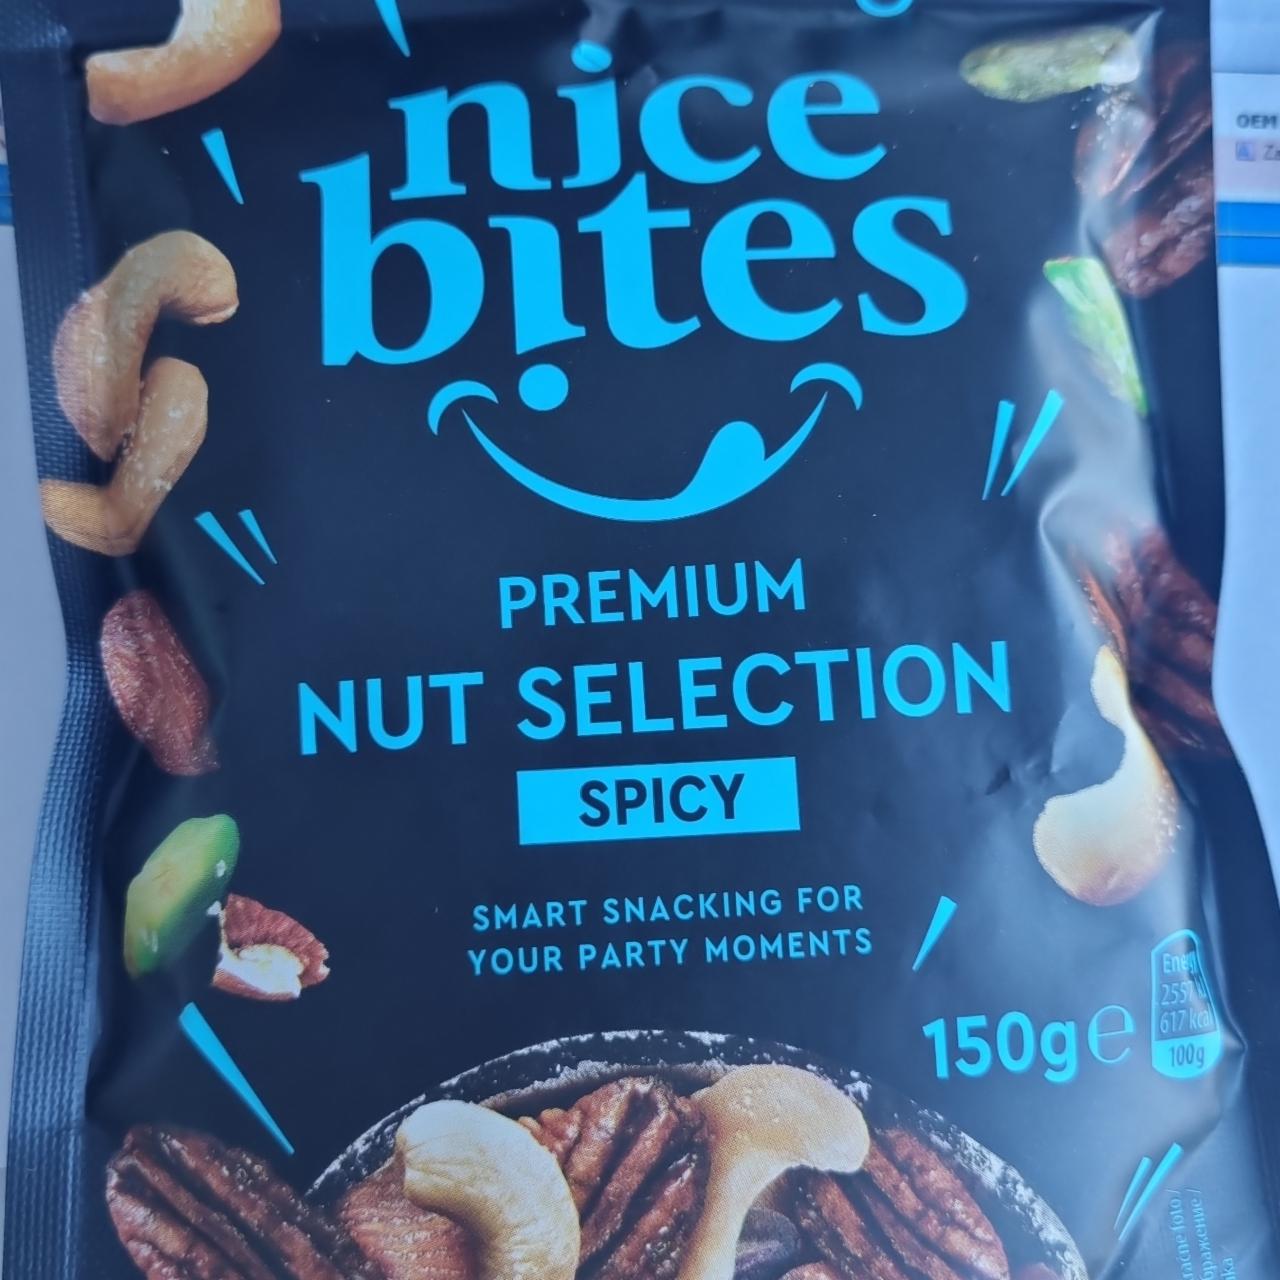 Fotografie - Premium Nut selection spicy Nice Bites